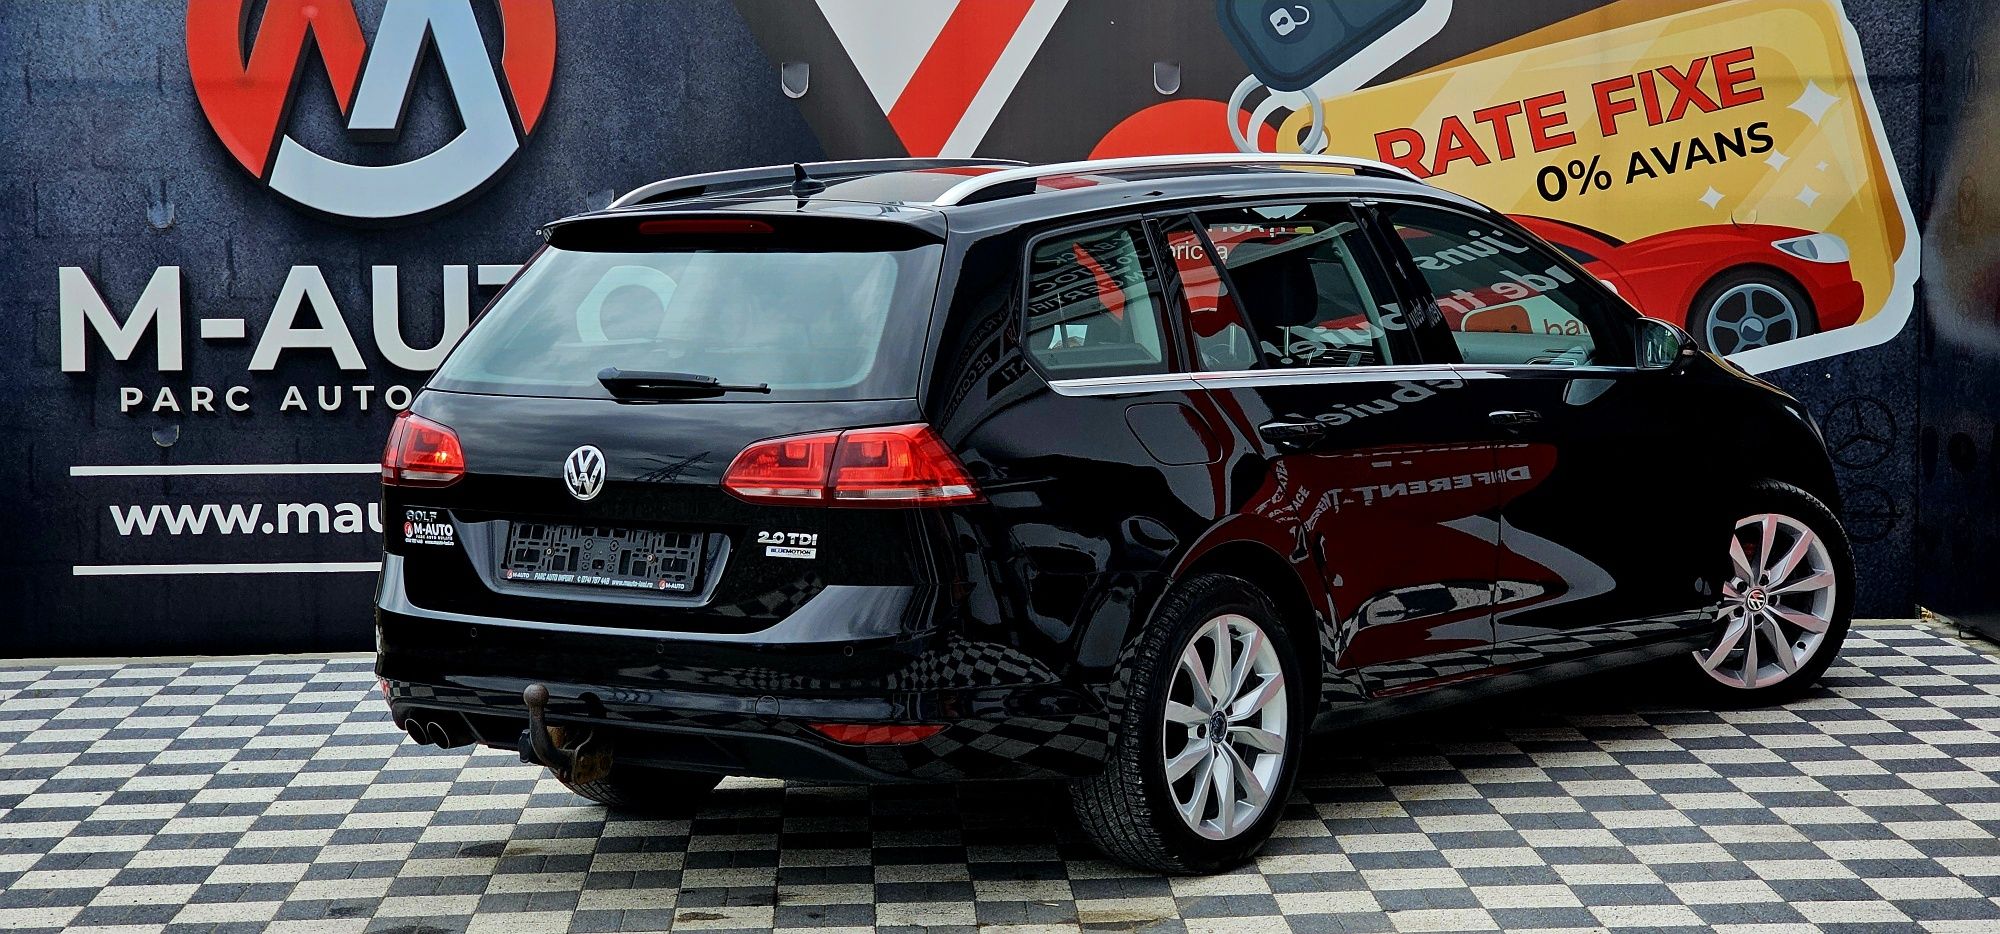 VW GOLF 7 2.0TDI 2015 klima navi piele RATE Garantie Livrare gratuita